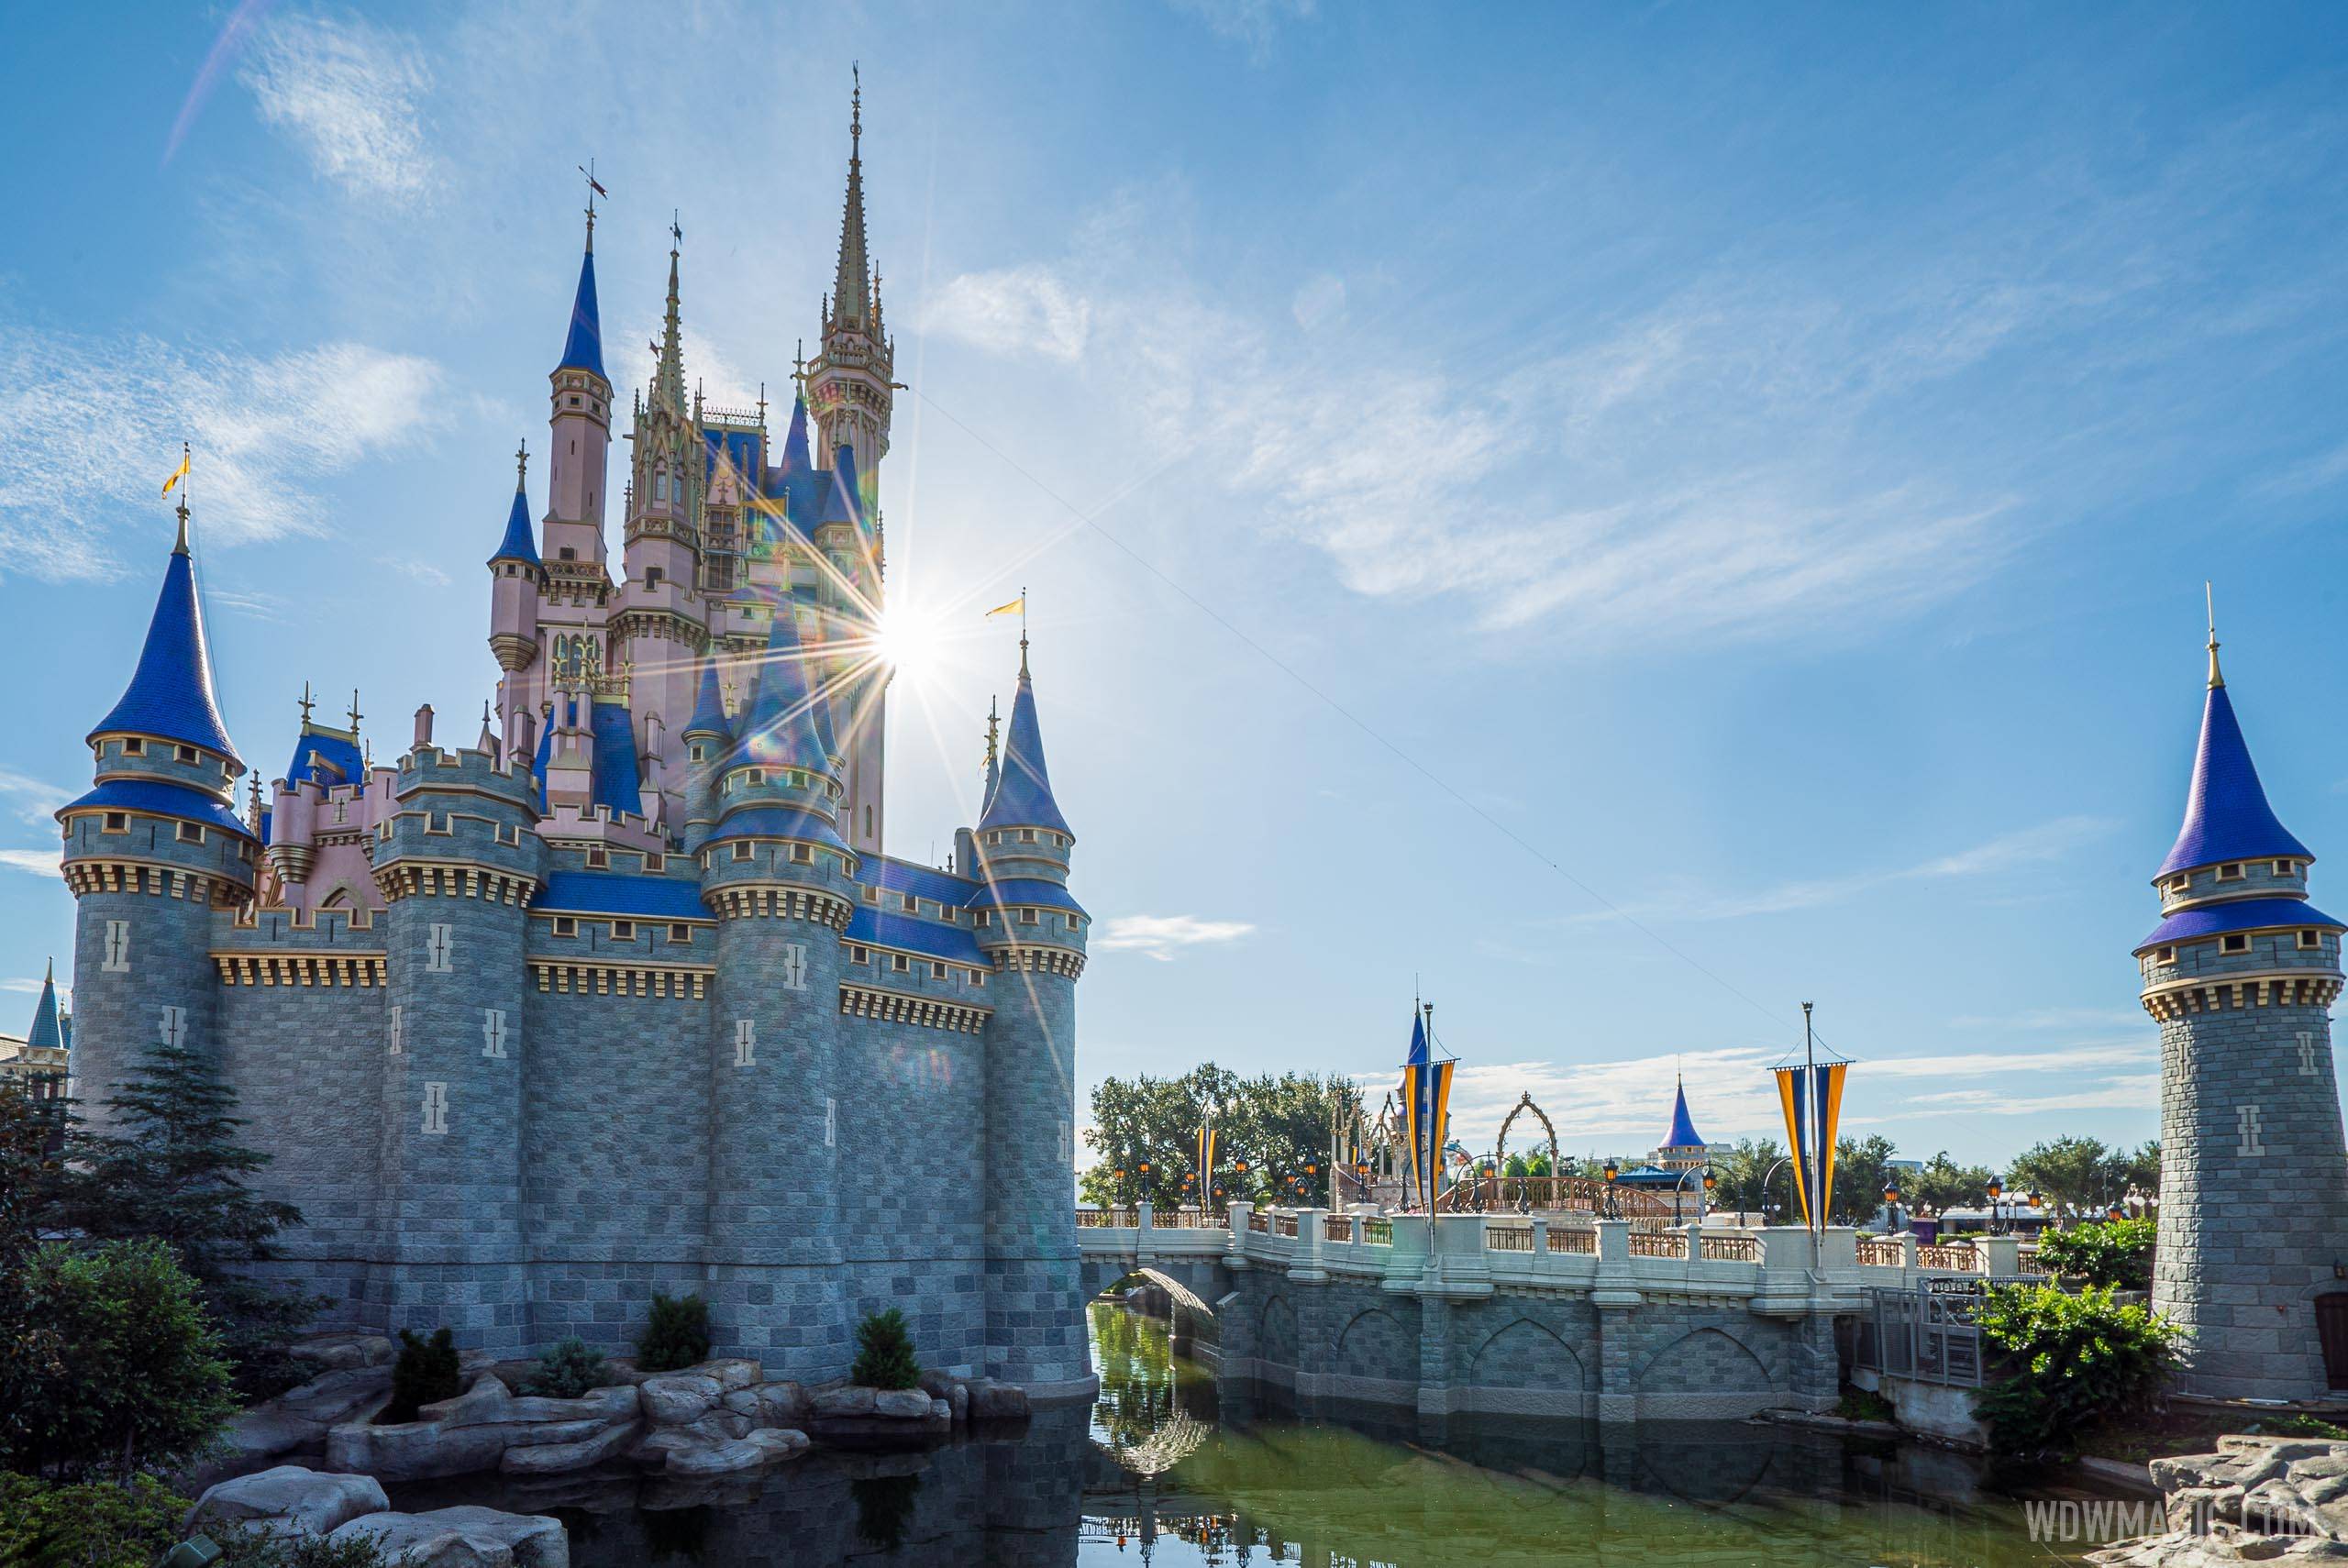 Cinderella Castle refurbishment now complete with all walls down